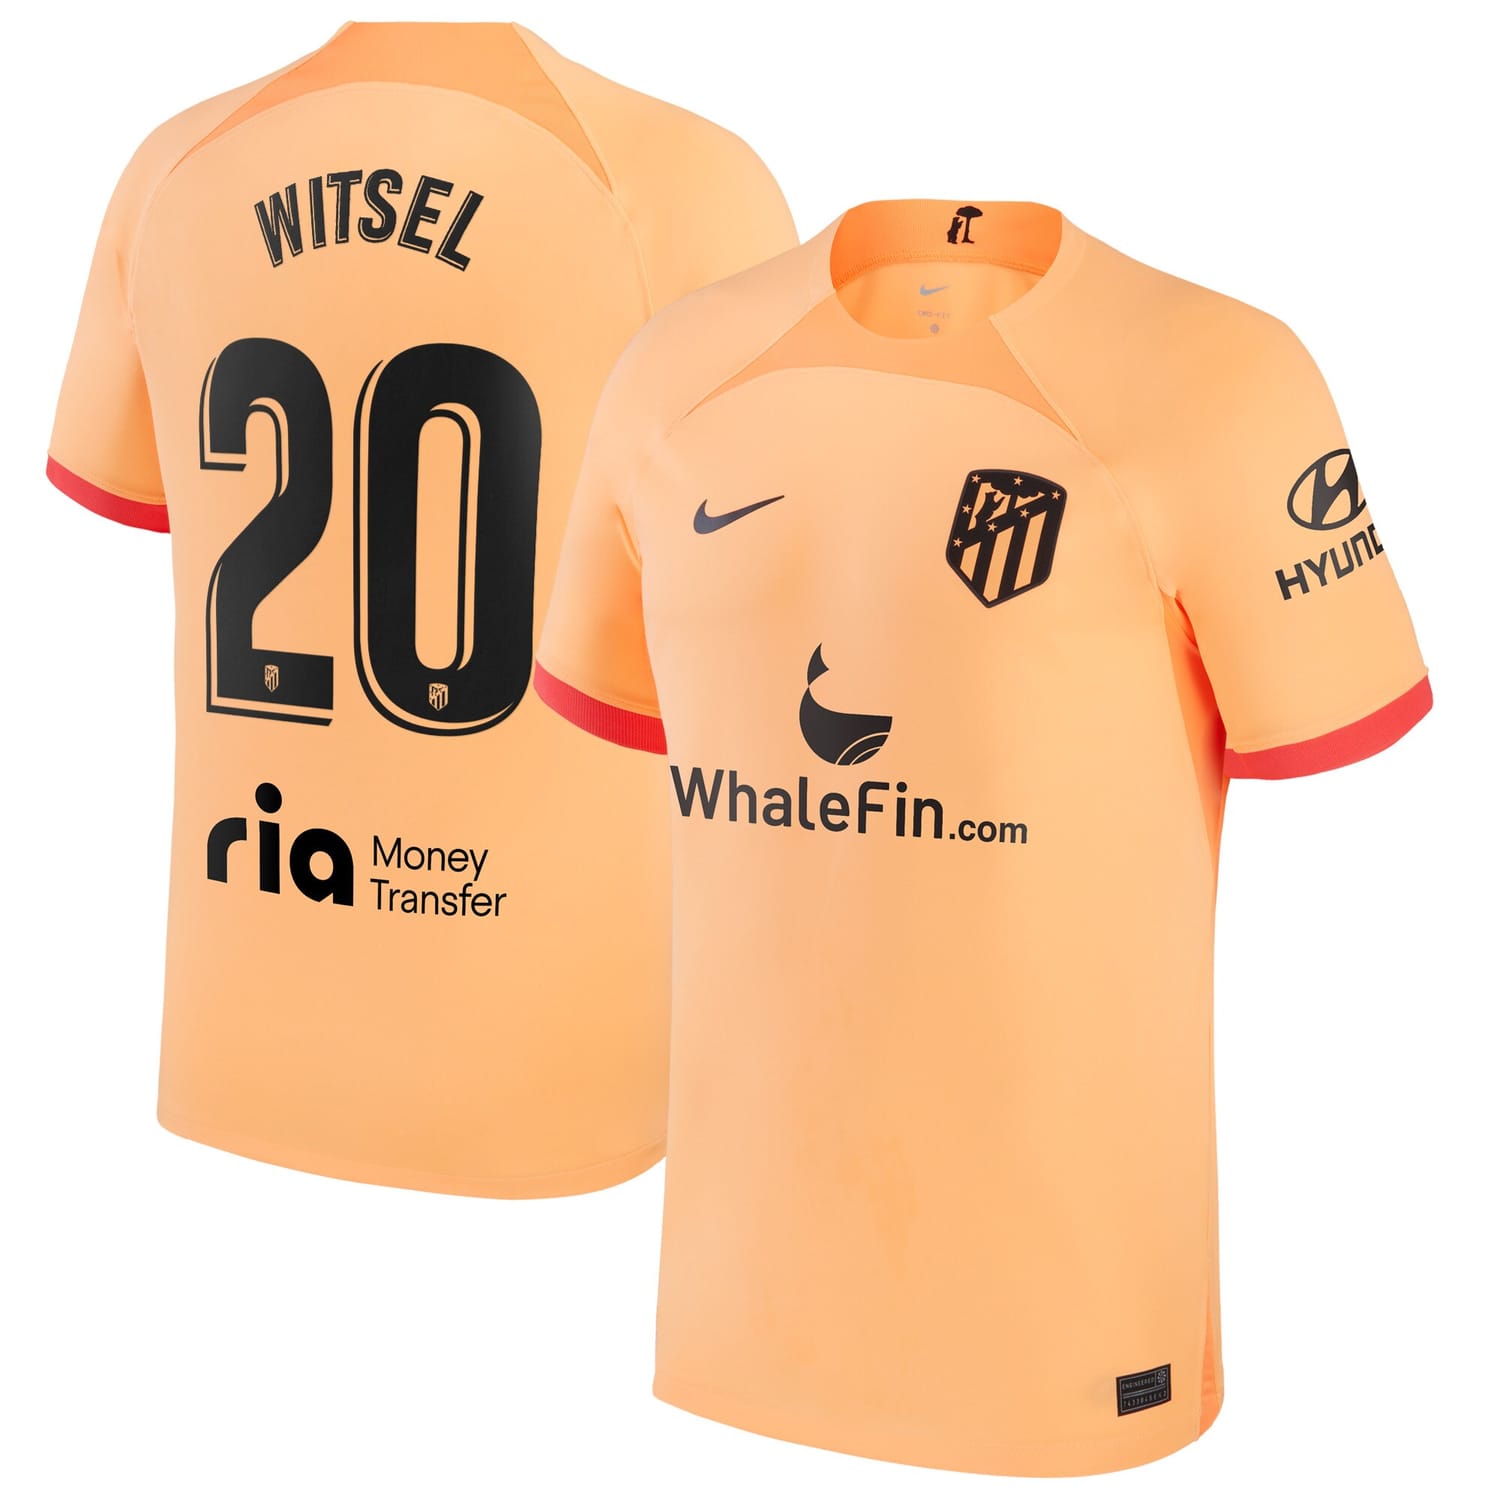 La Liga Atletico de Madrid Third Jersey Shirt 2022-23 player Axel Witsel 20 printing for Men